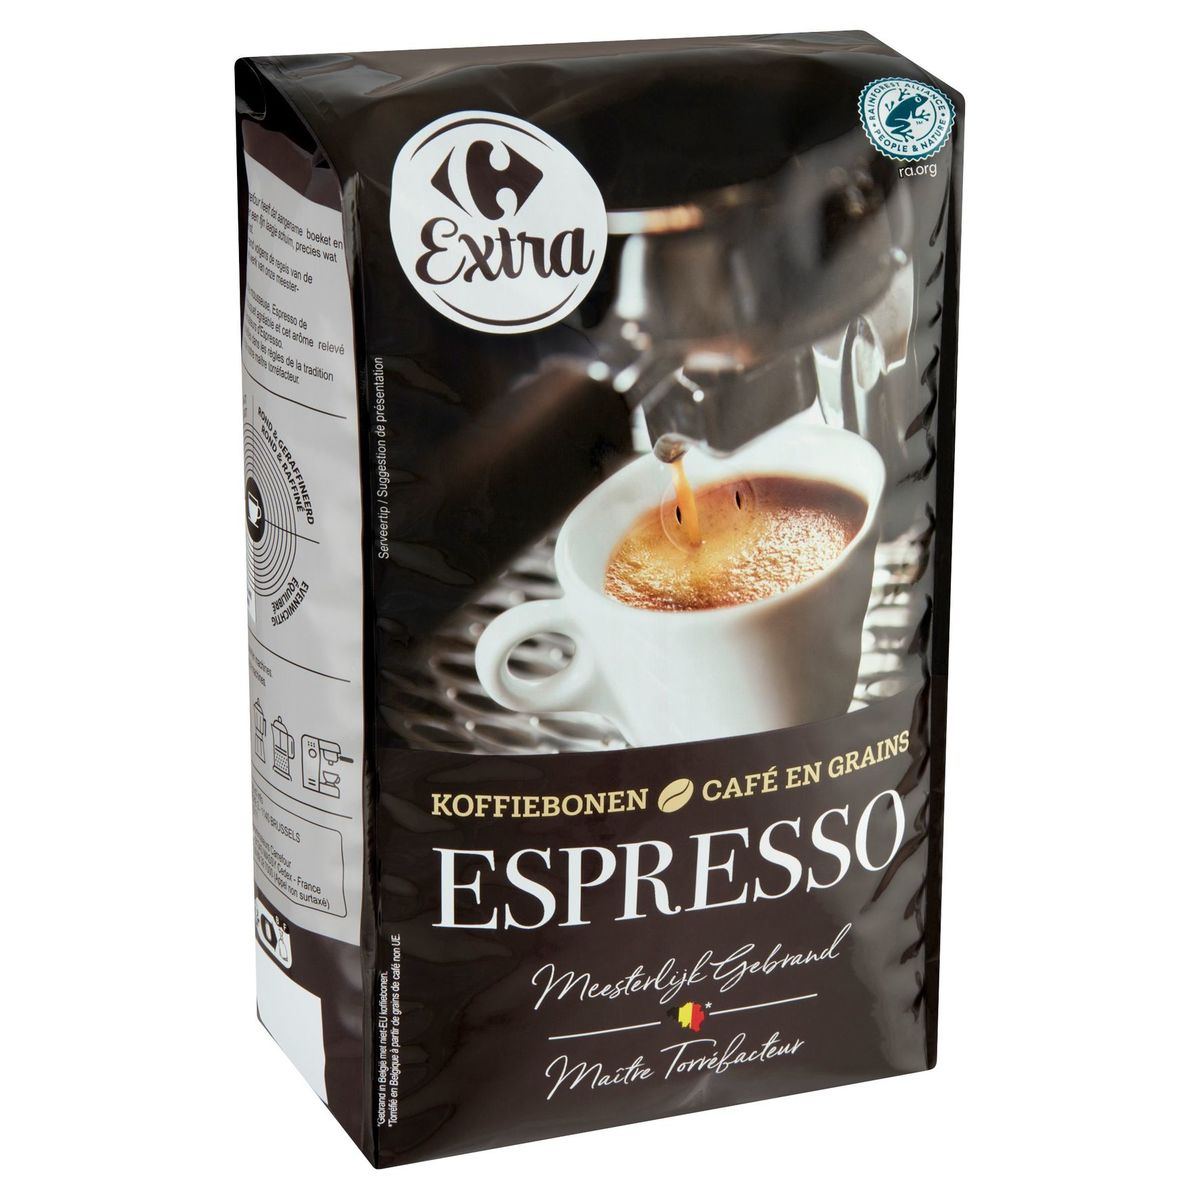 Carrefour Extra Koffiebonen Espresso 1 kg